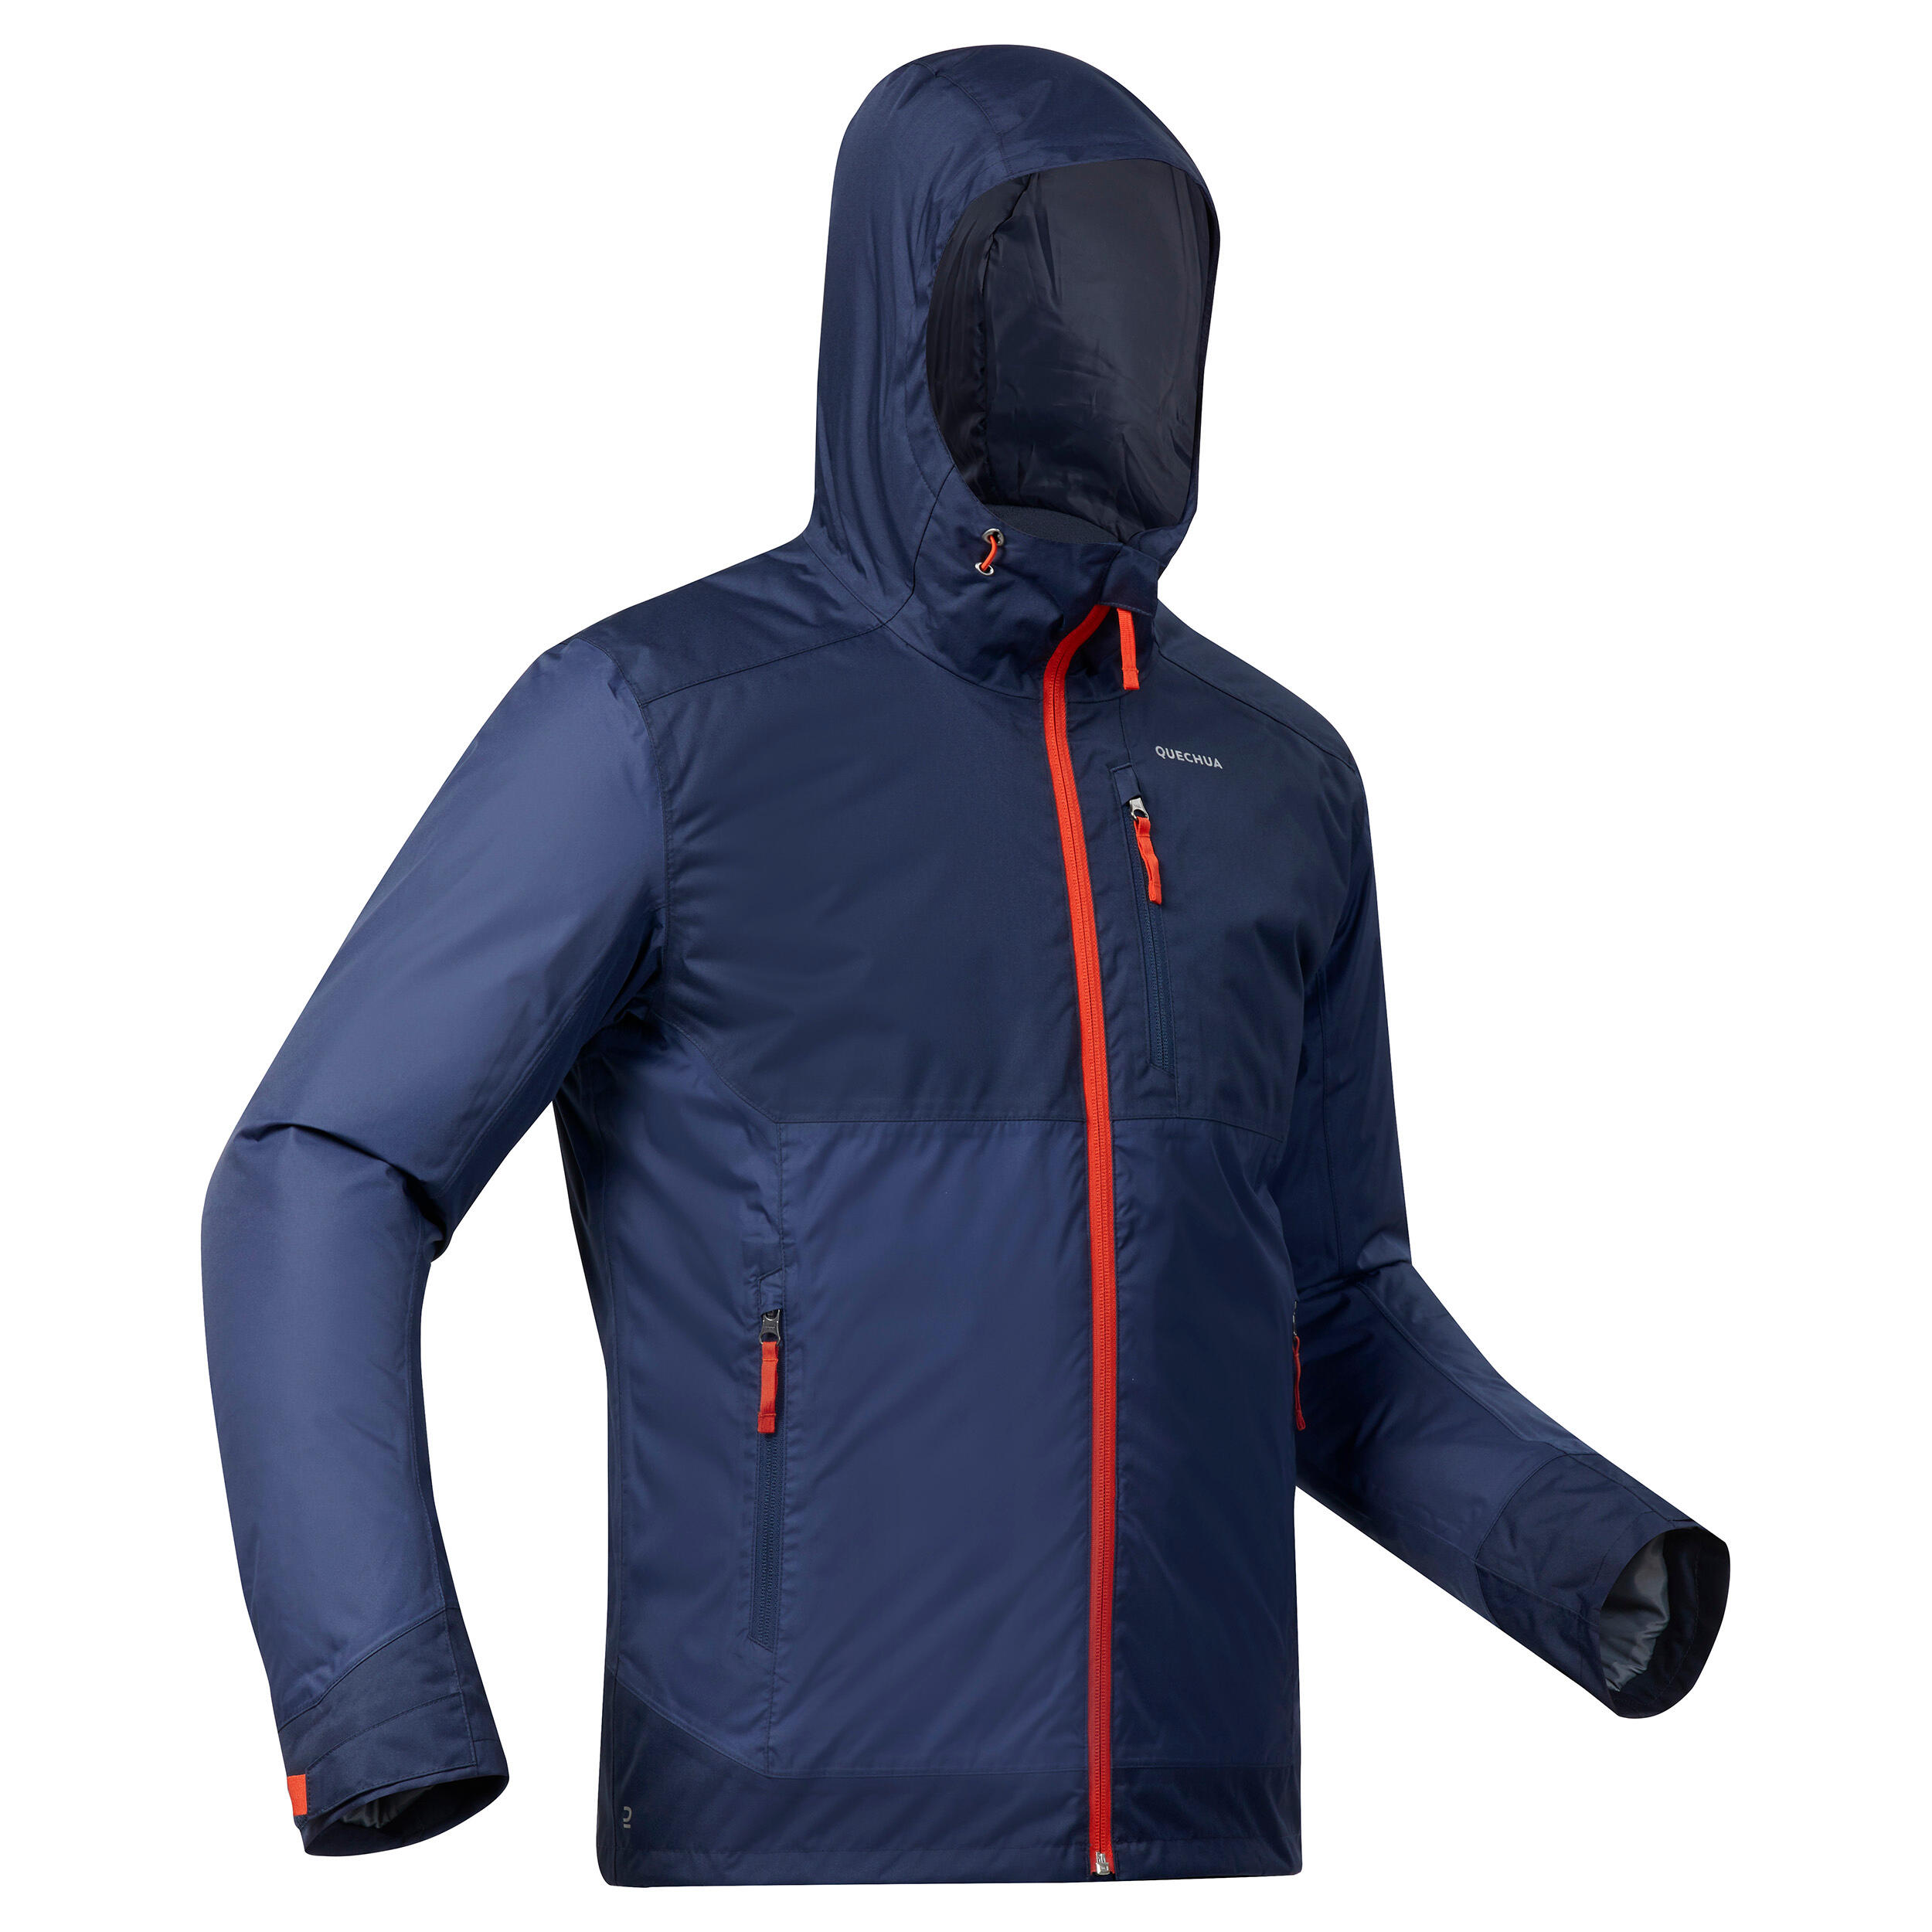 Men’s hiking waterproof winter jacket - SH500 -10°C 2/8